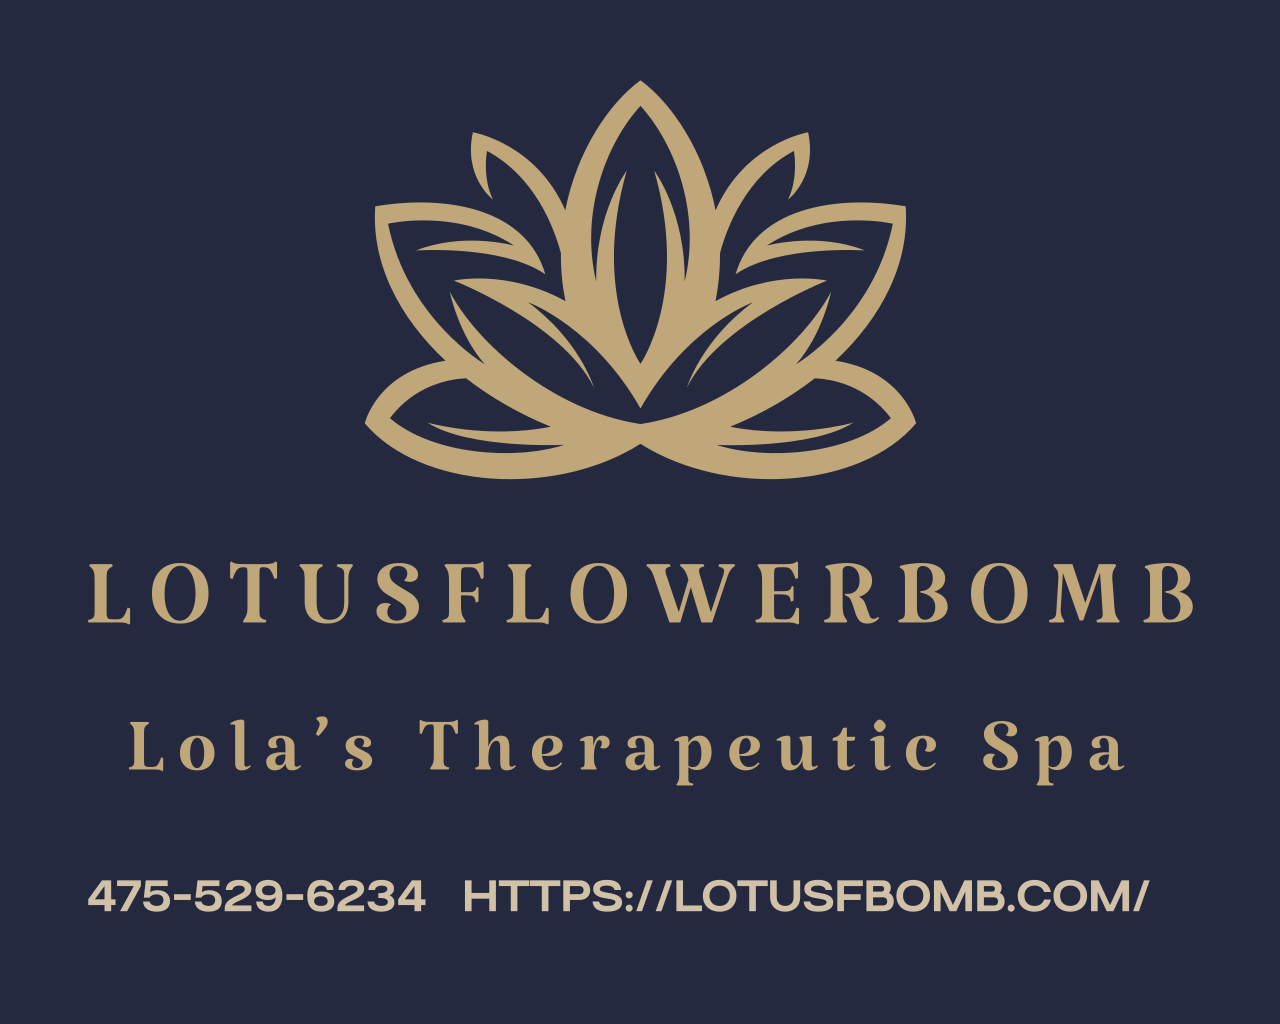 Lotus FlowerBomb  Lola’s Therapeutic Spa's logo